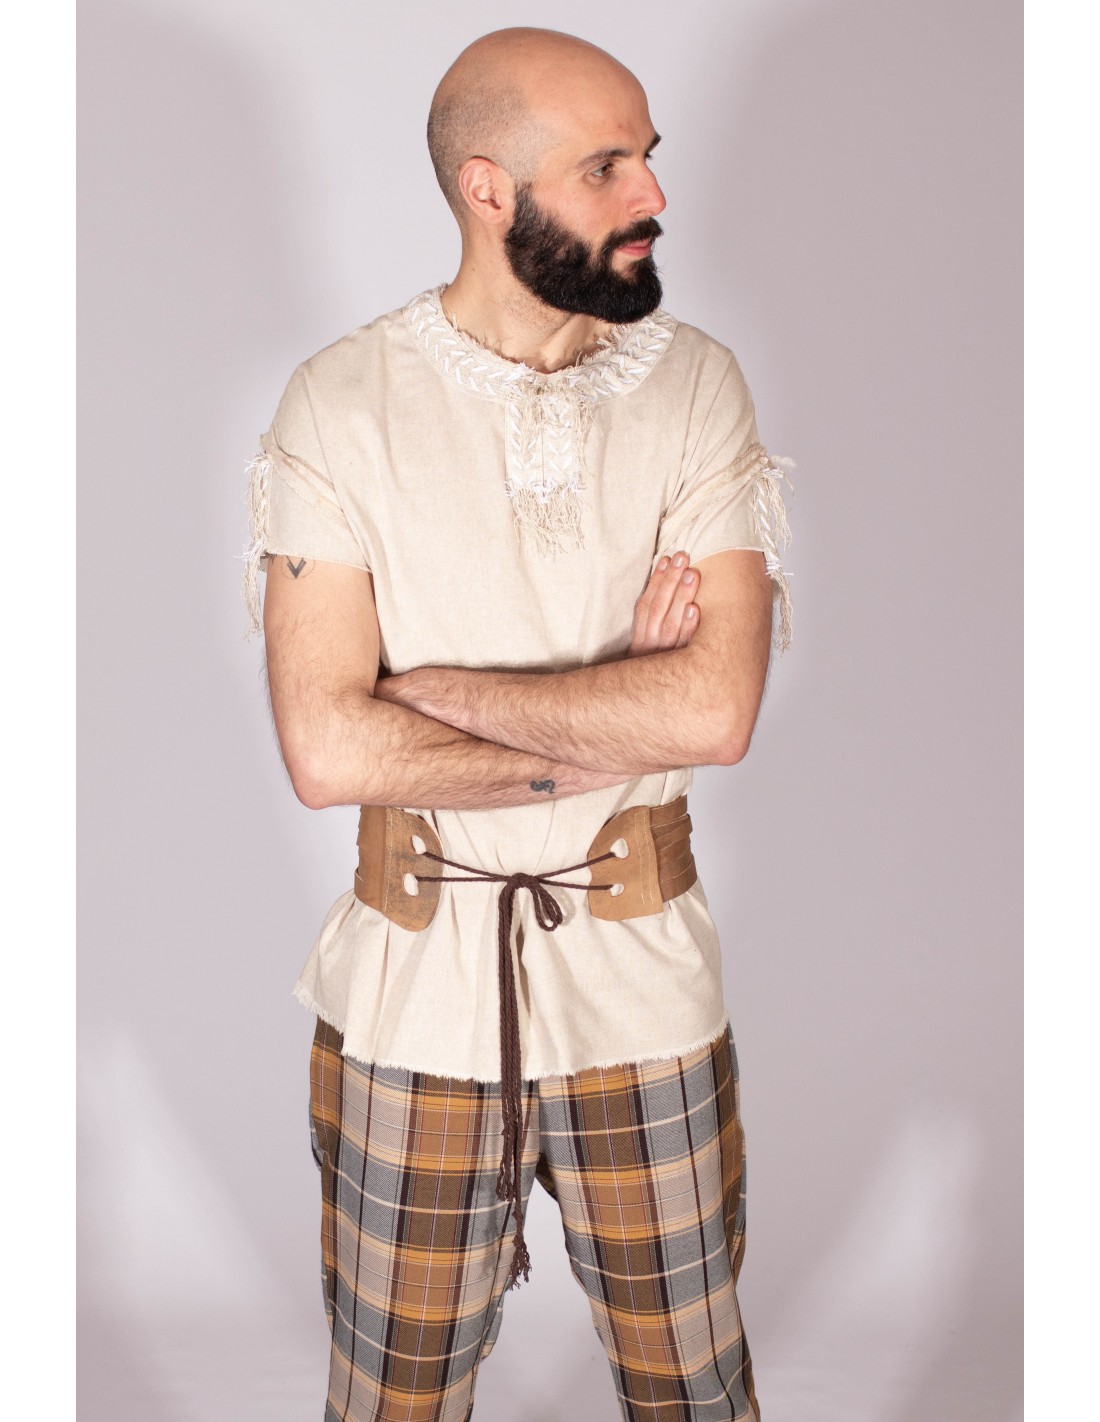 Celtic plaid trousers or Viking trousers